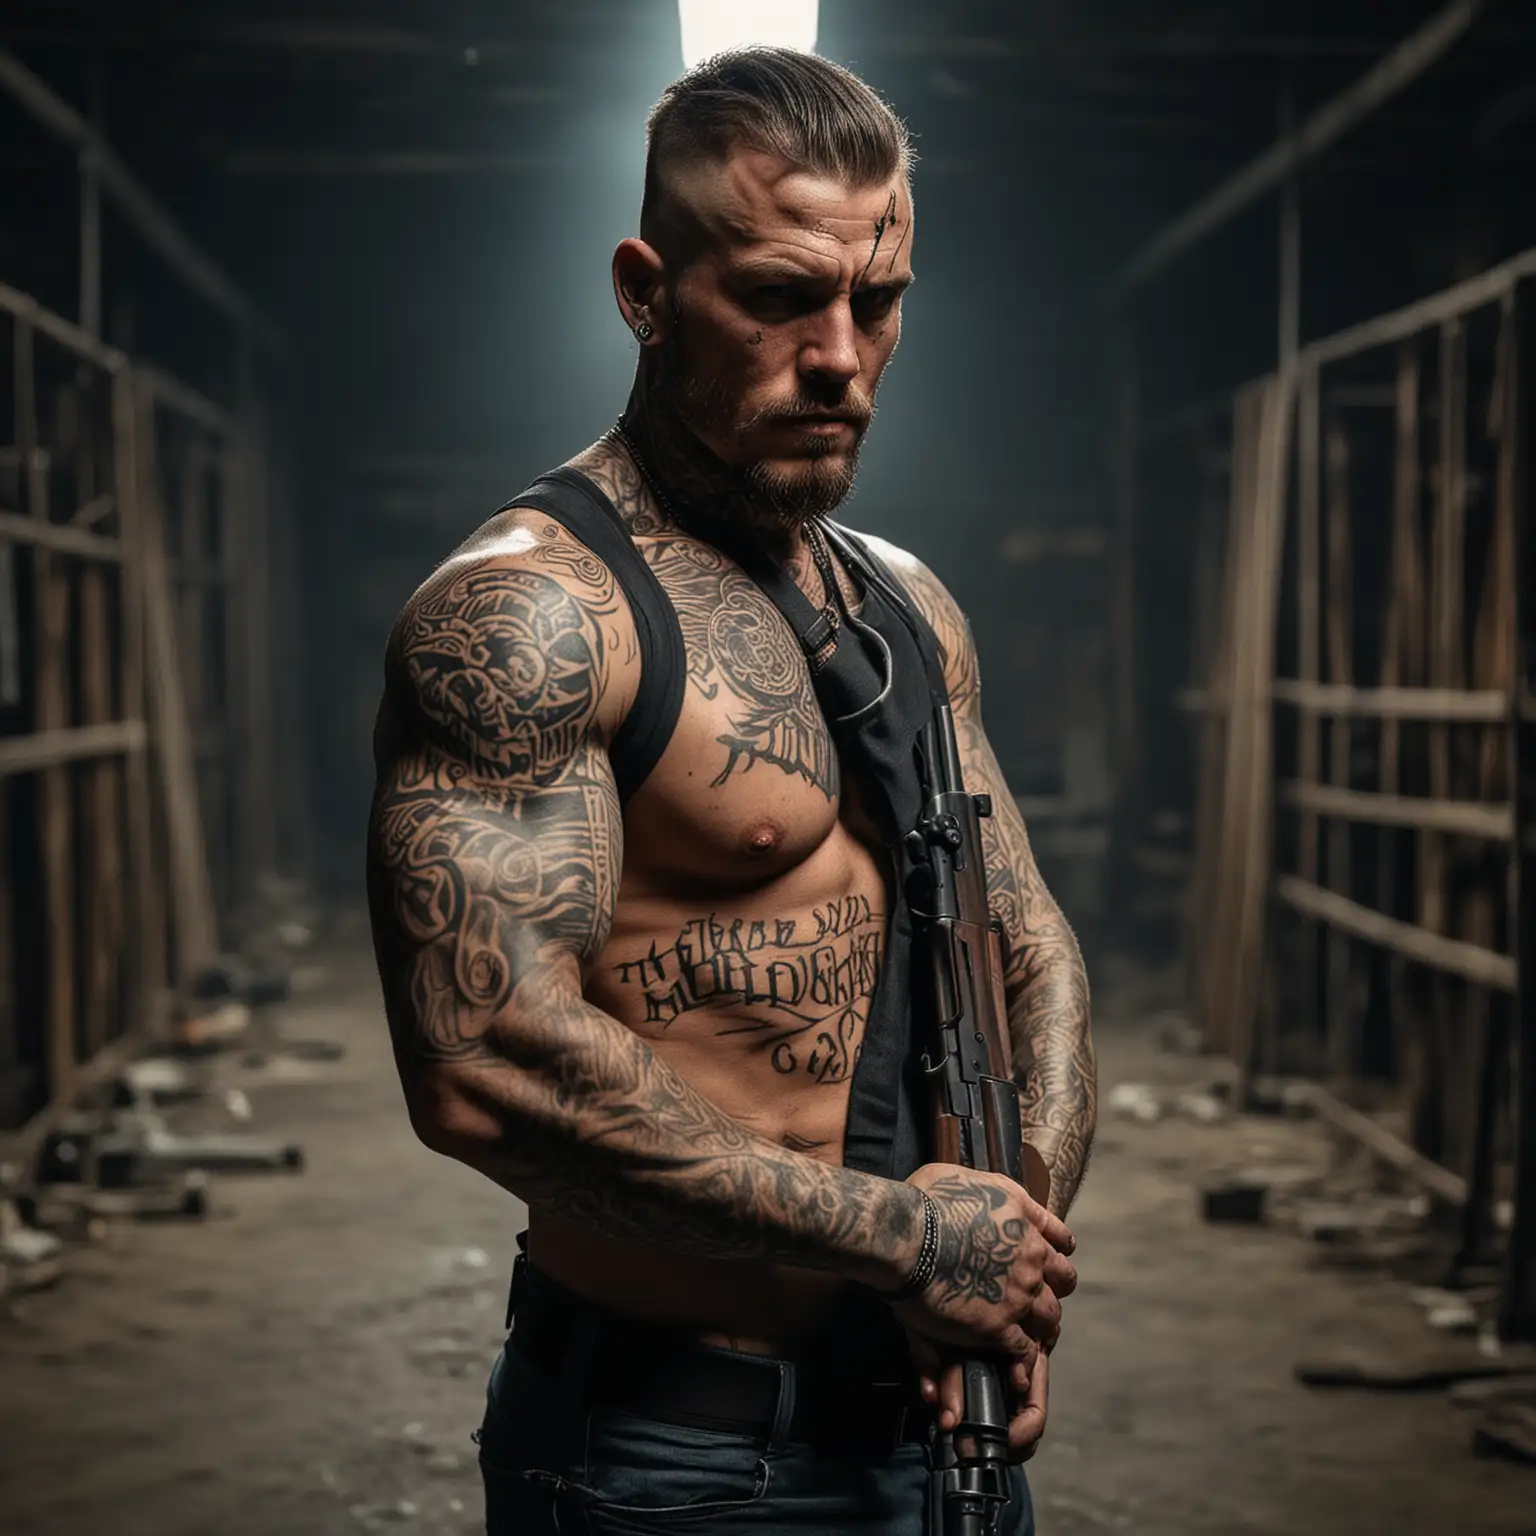 A tough-looking man with tattoos holding a shotgun in a dark warehouse